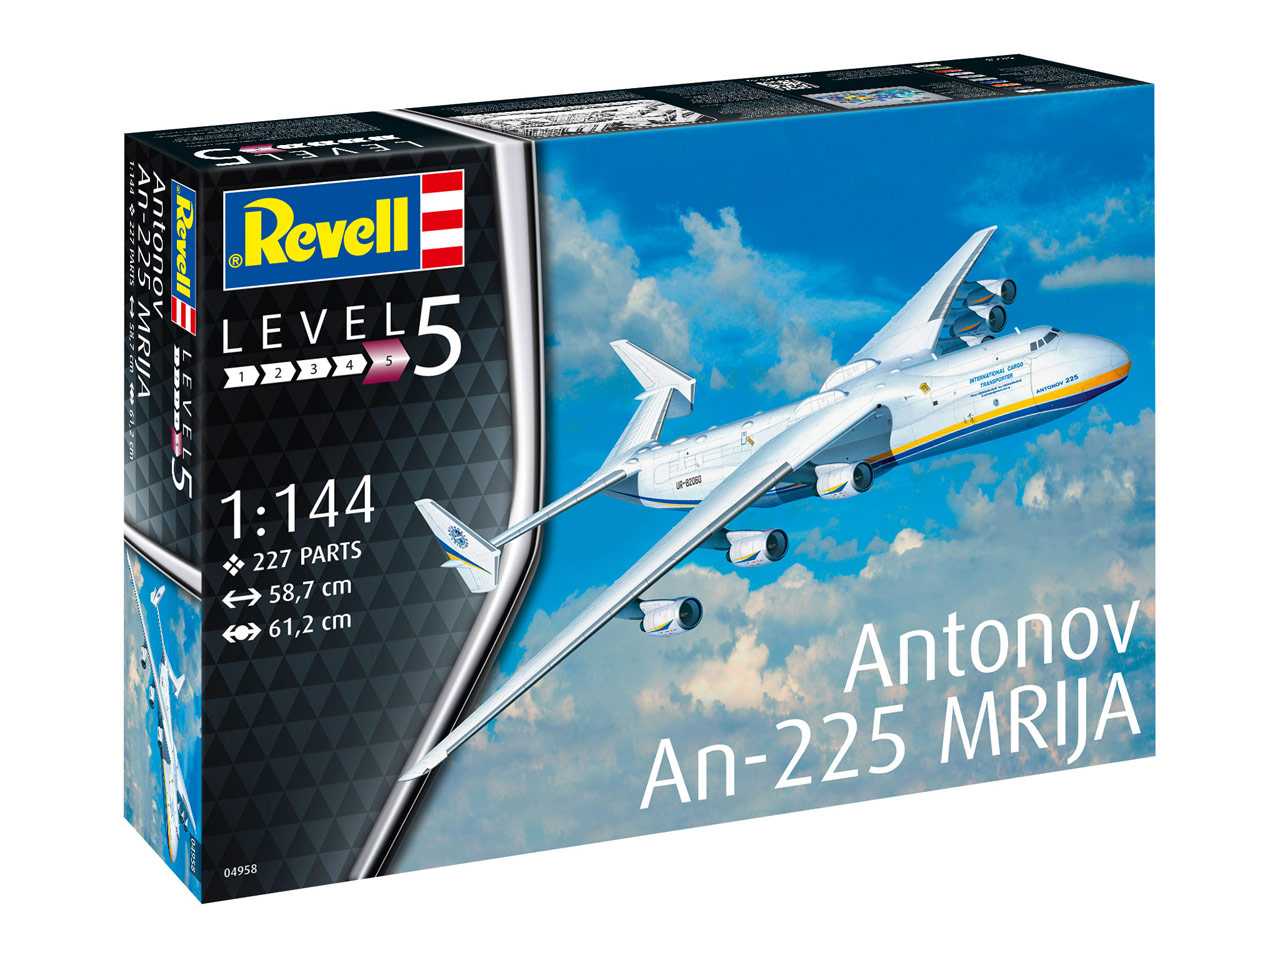 Revell Plastic ModelKit letadlo 04958 - Antonov An-225 Mrija (1:144)